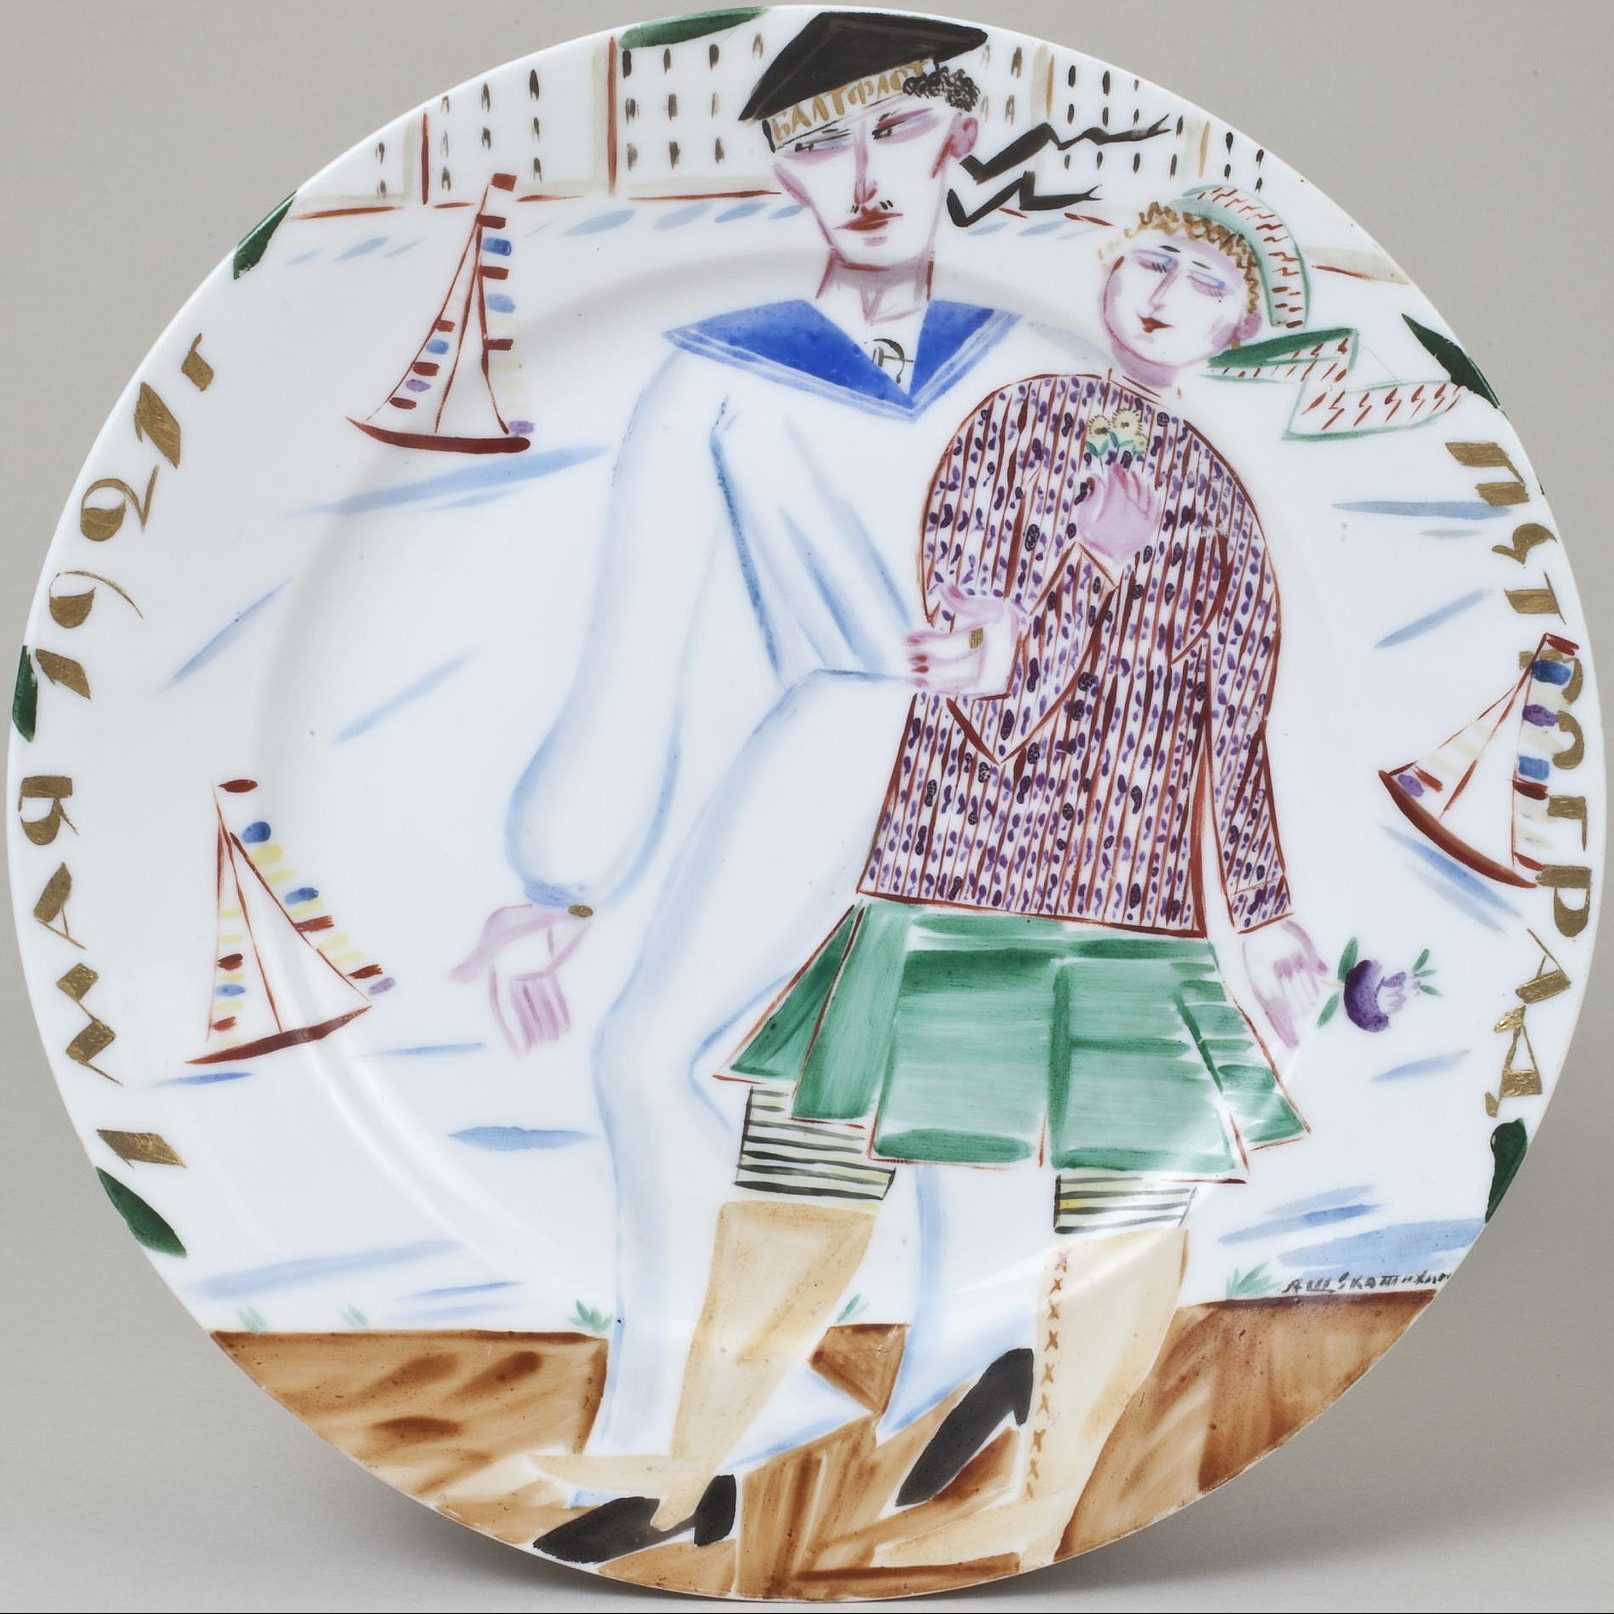 Soviet porcelain plate "Sailor's Walk" after Shchekotikhina-Pototskaya